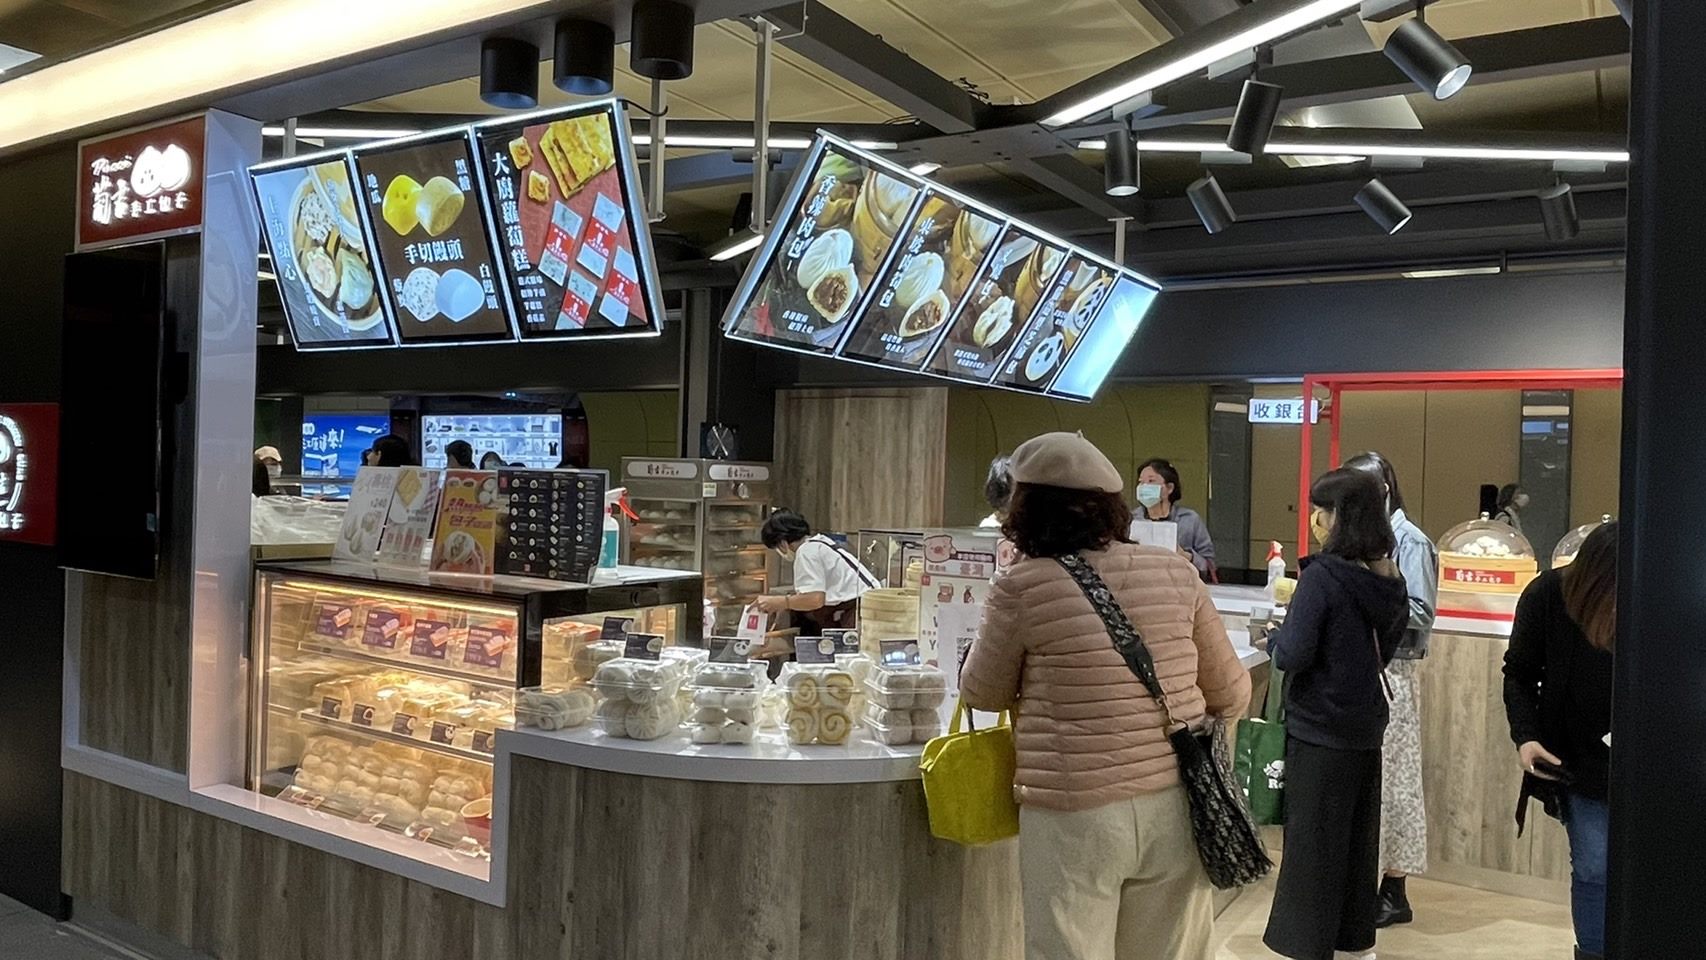 Tempat perbelanjaan yang juga merupakan tempat makan baru pertama di MRT Taipei. Sumber: Pemerintah Kota Taipei